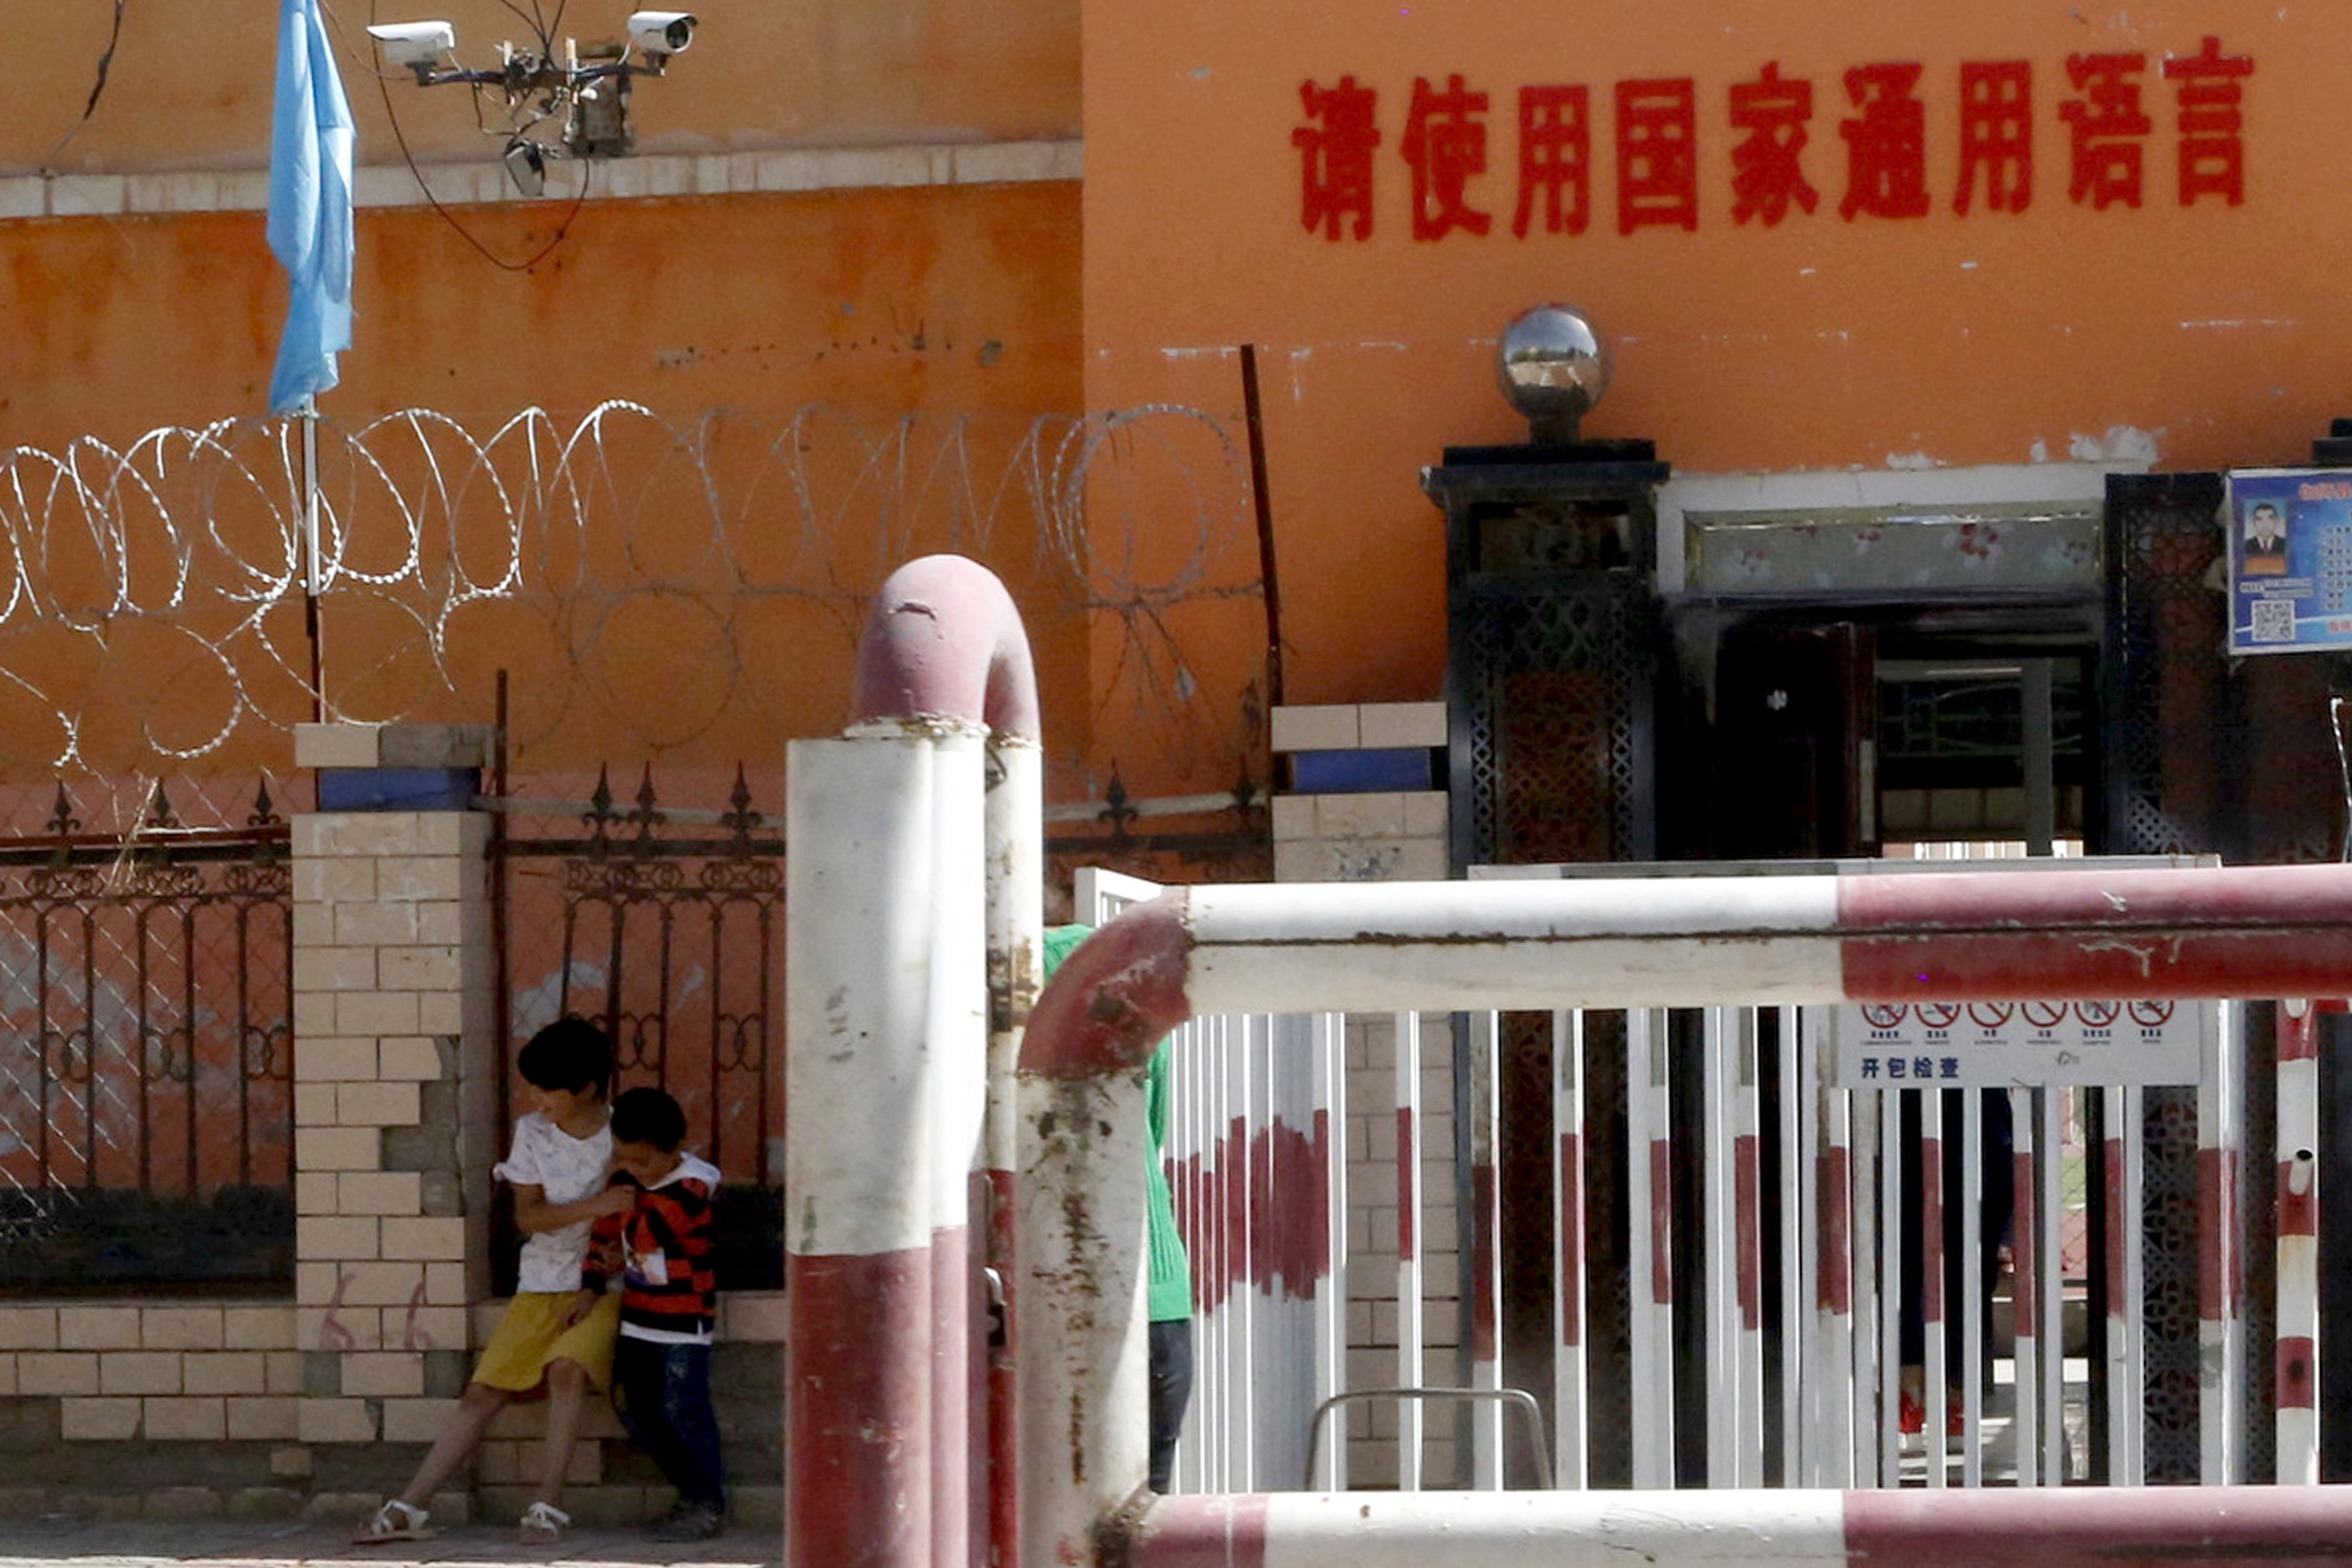 US criticizes treatment of Uighurs in latest China row